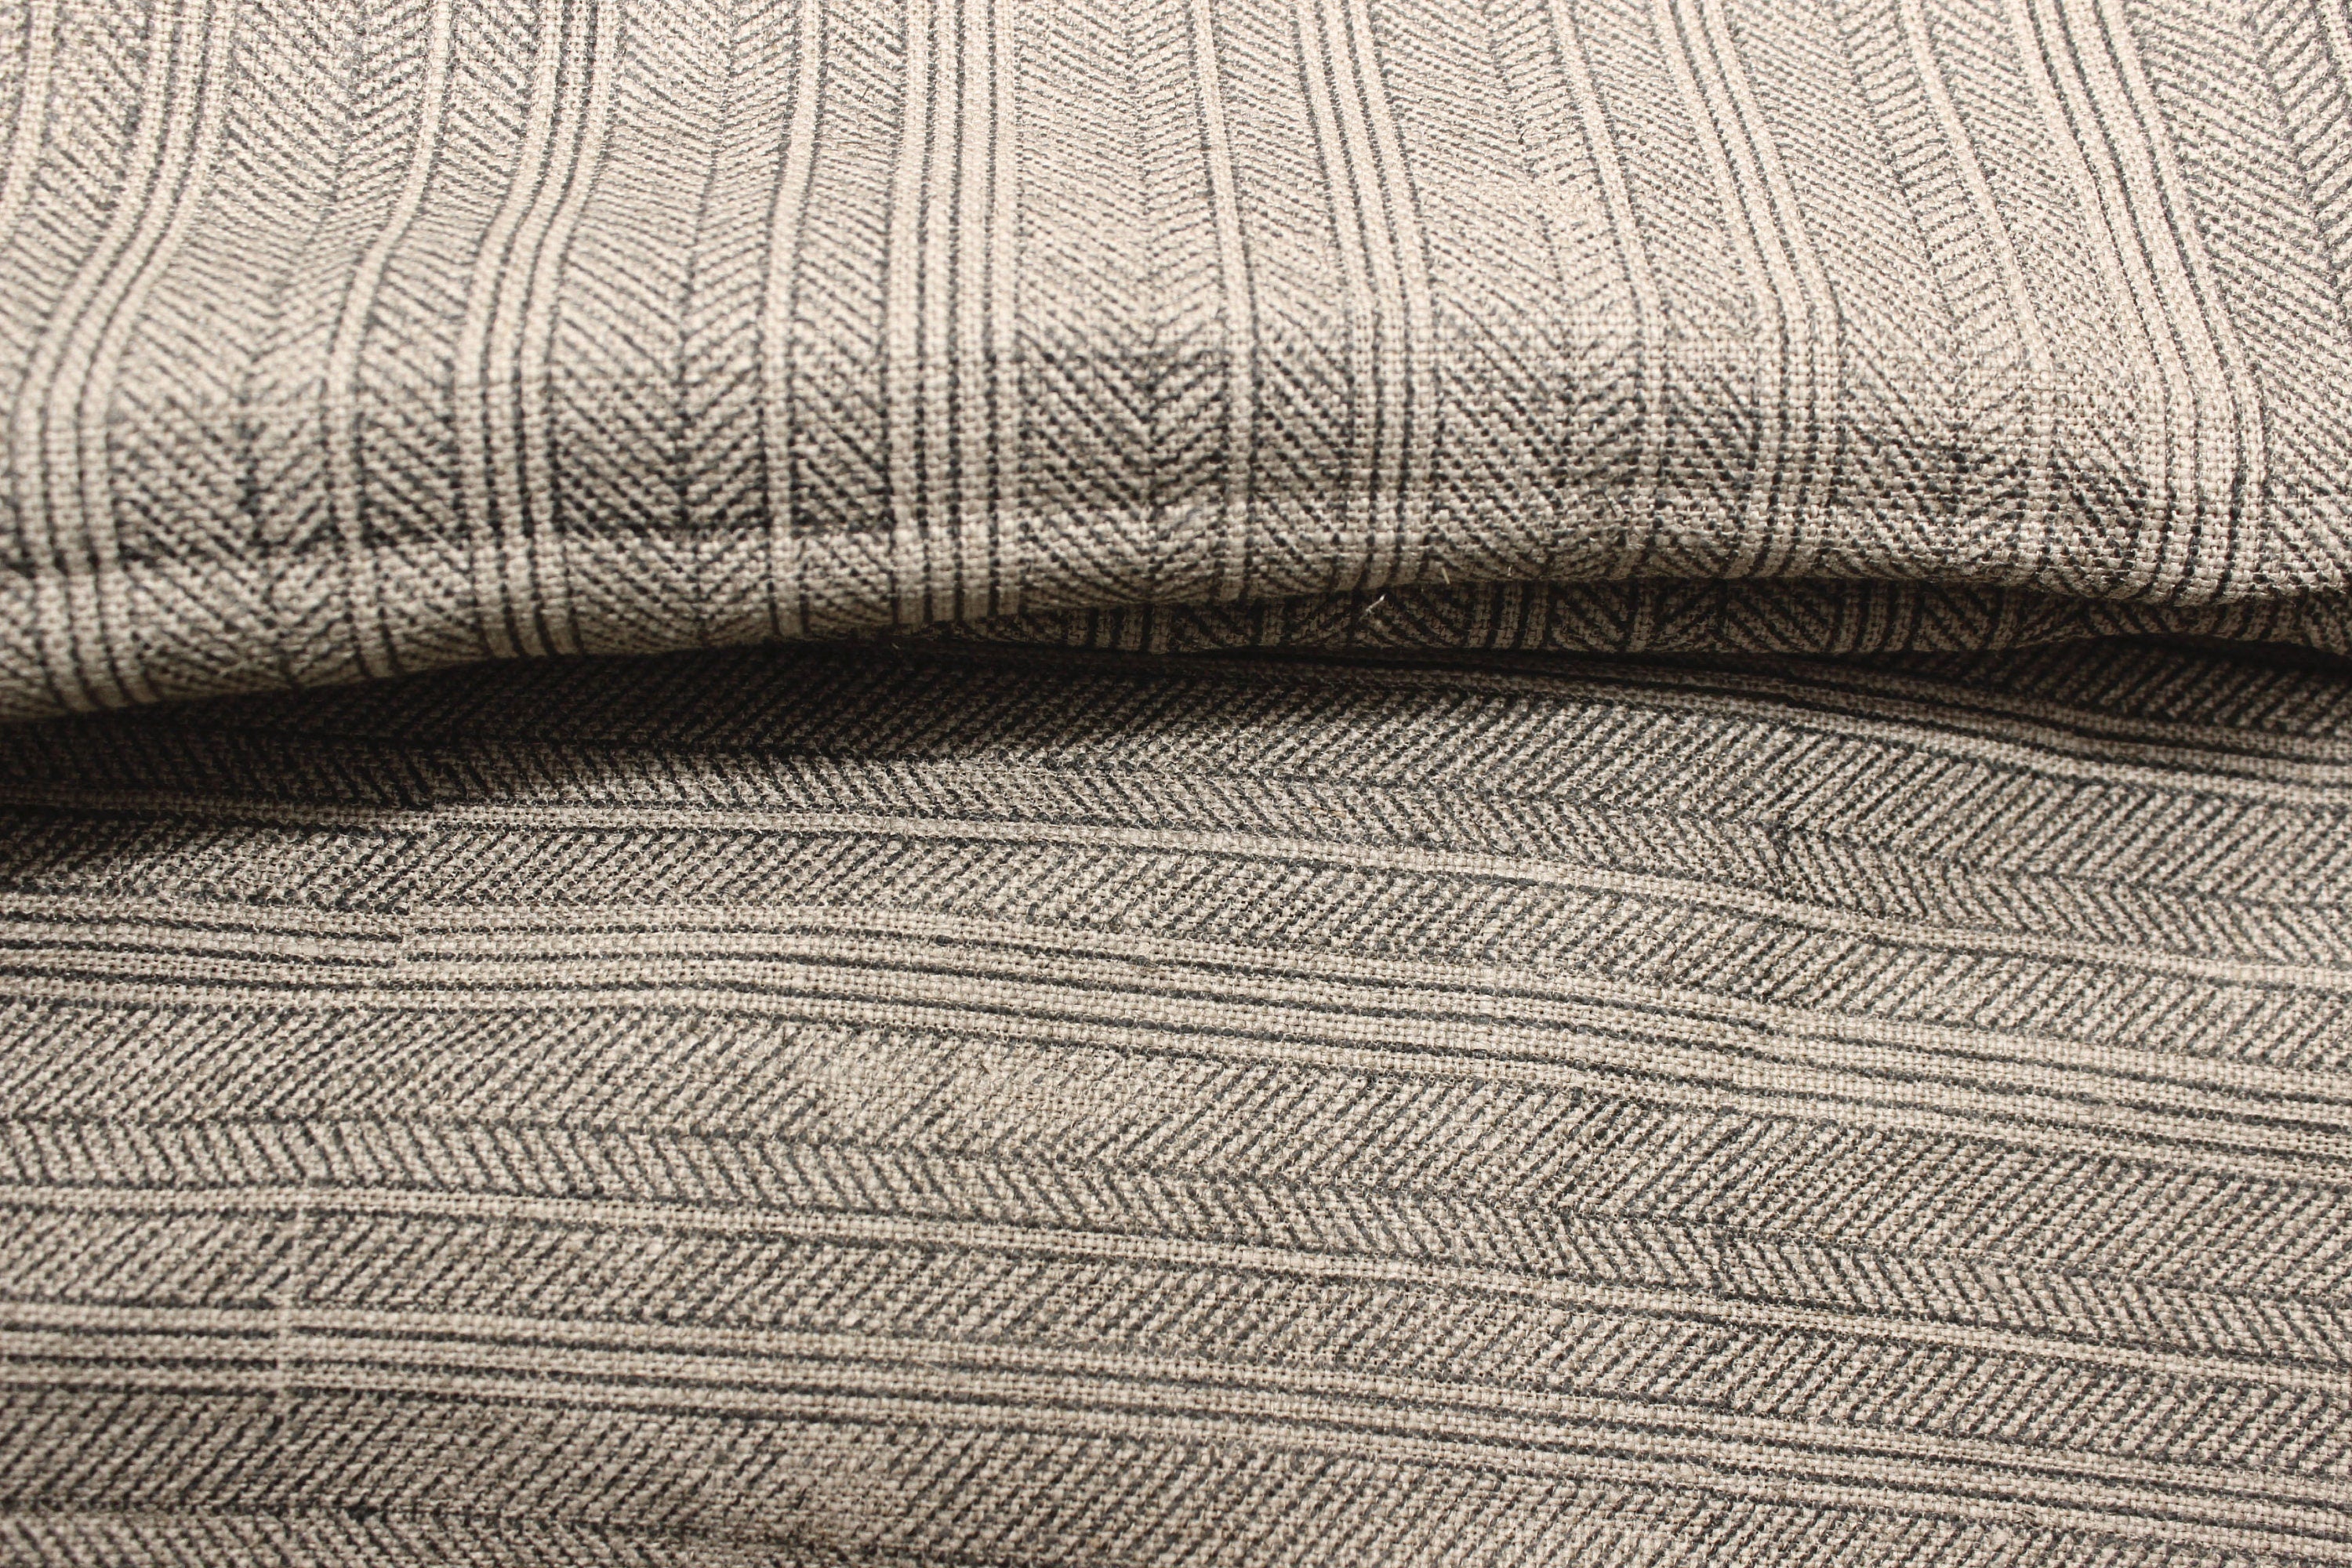 Black Leheriya  100% Flax Linen With Block Print  Handmade Wood Blocked Printing  Indian Fabrics By The Yard  Upholstery & Pillow Decors